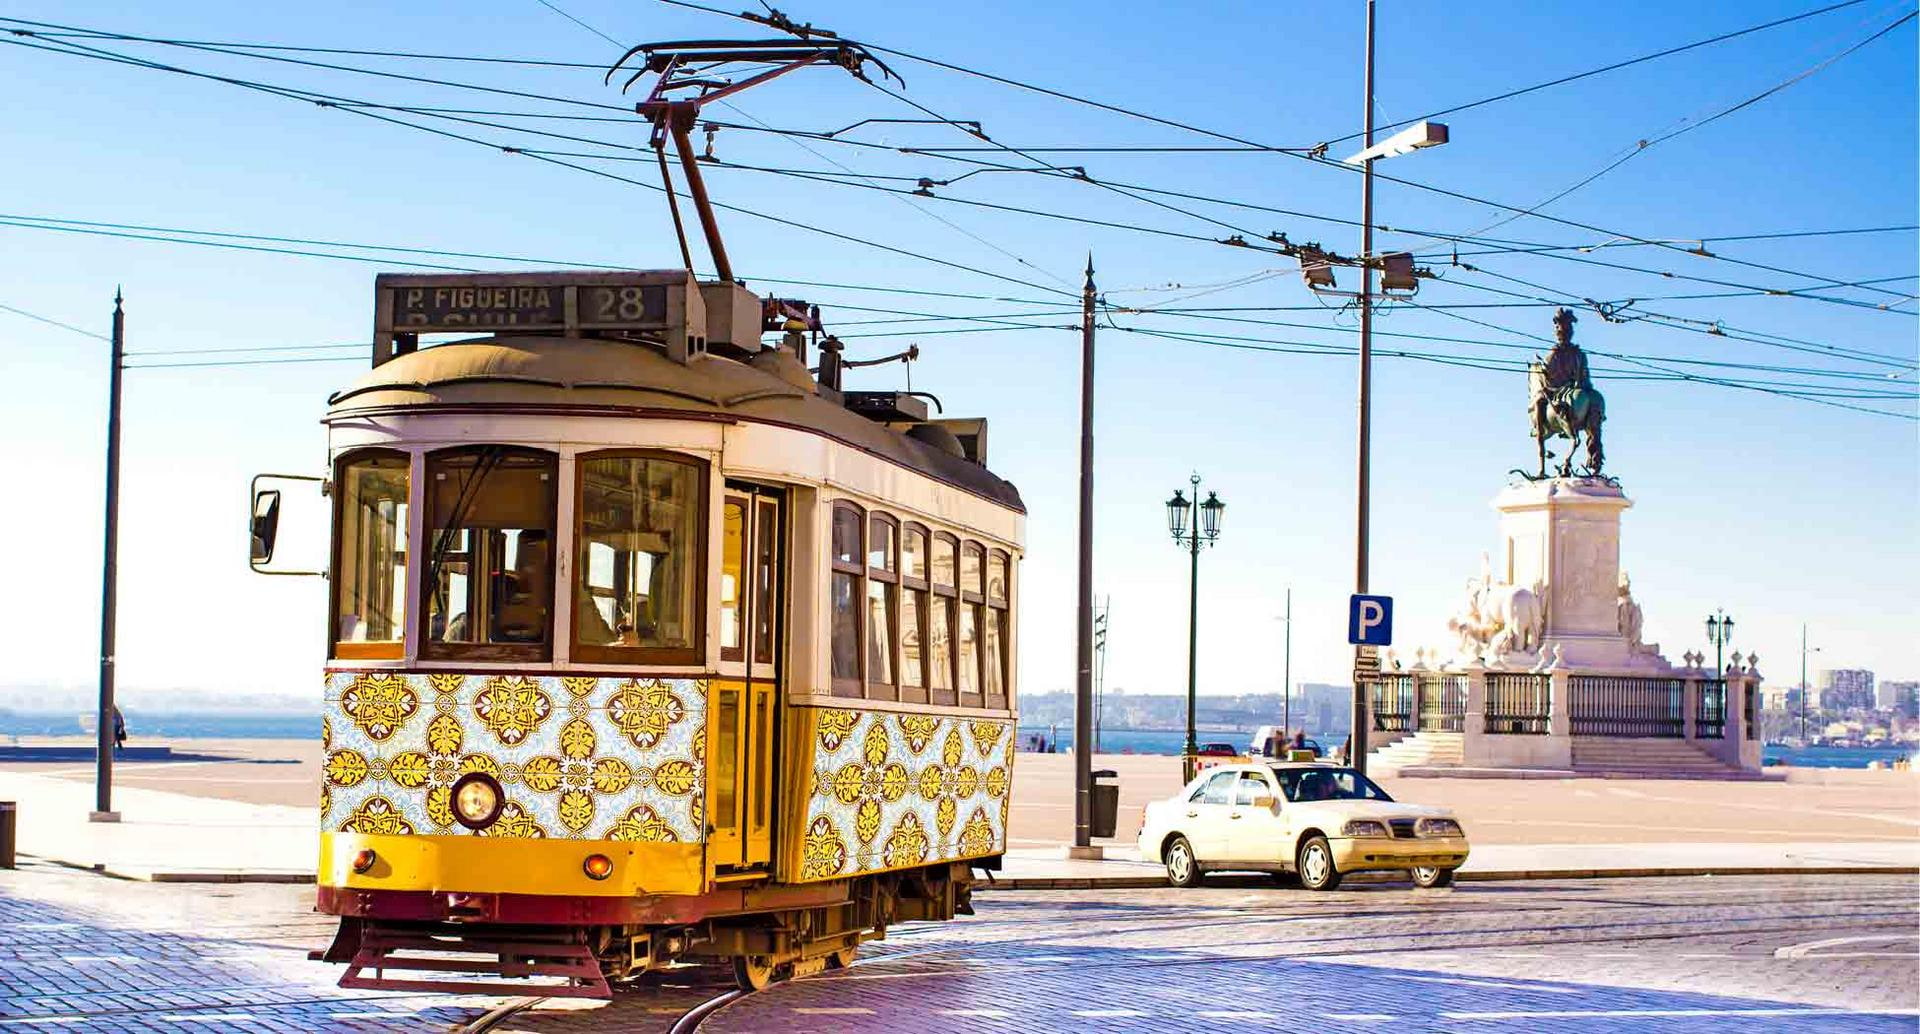 Traditionelle Tram in Portugal - Lissabon Tram 28